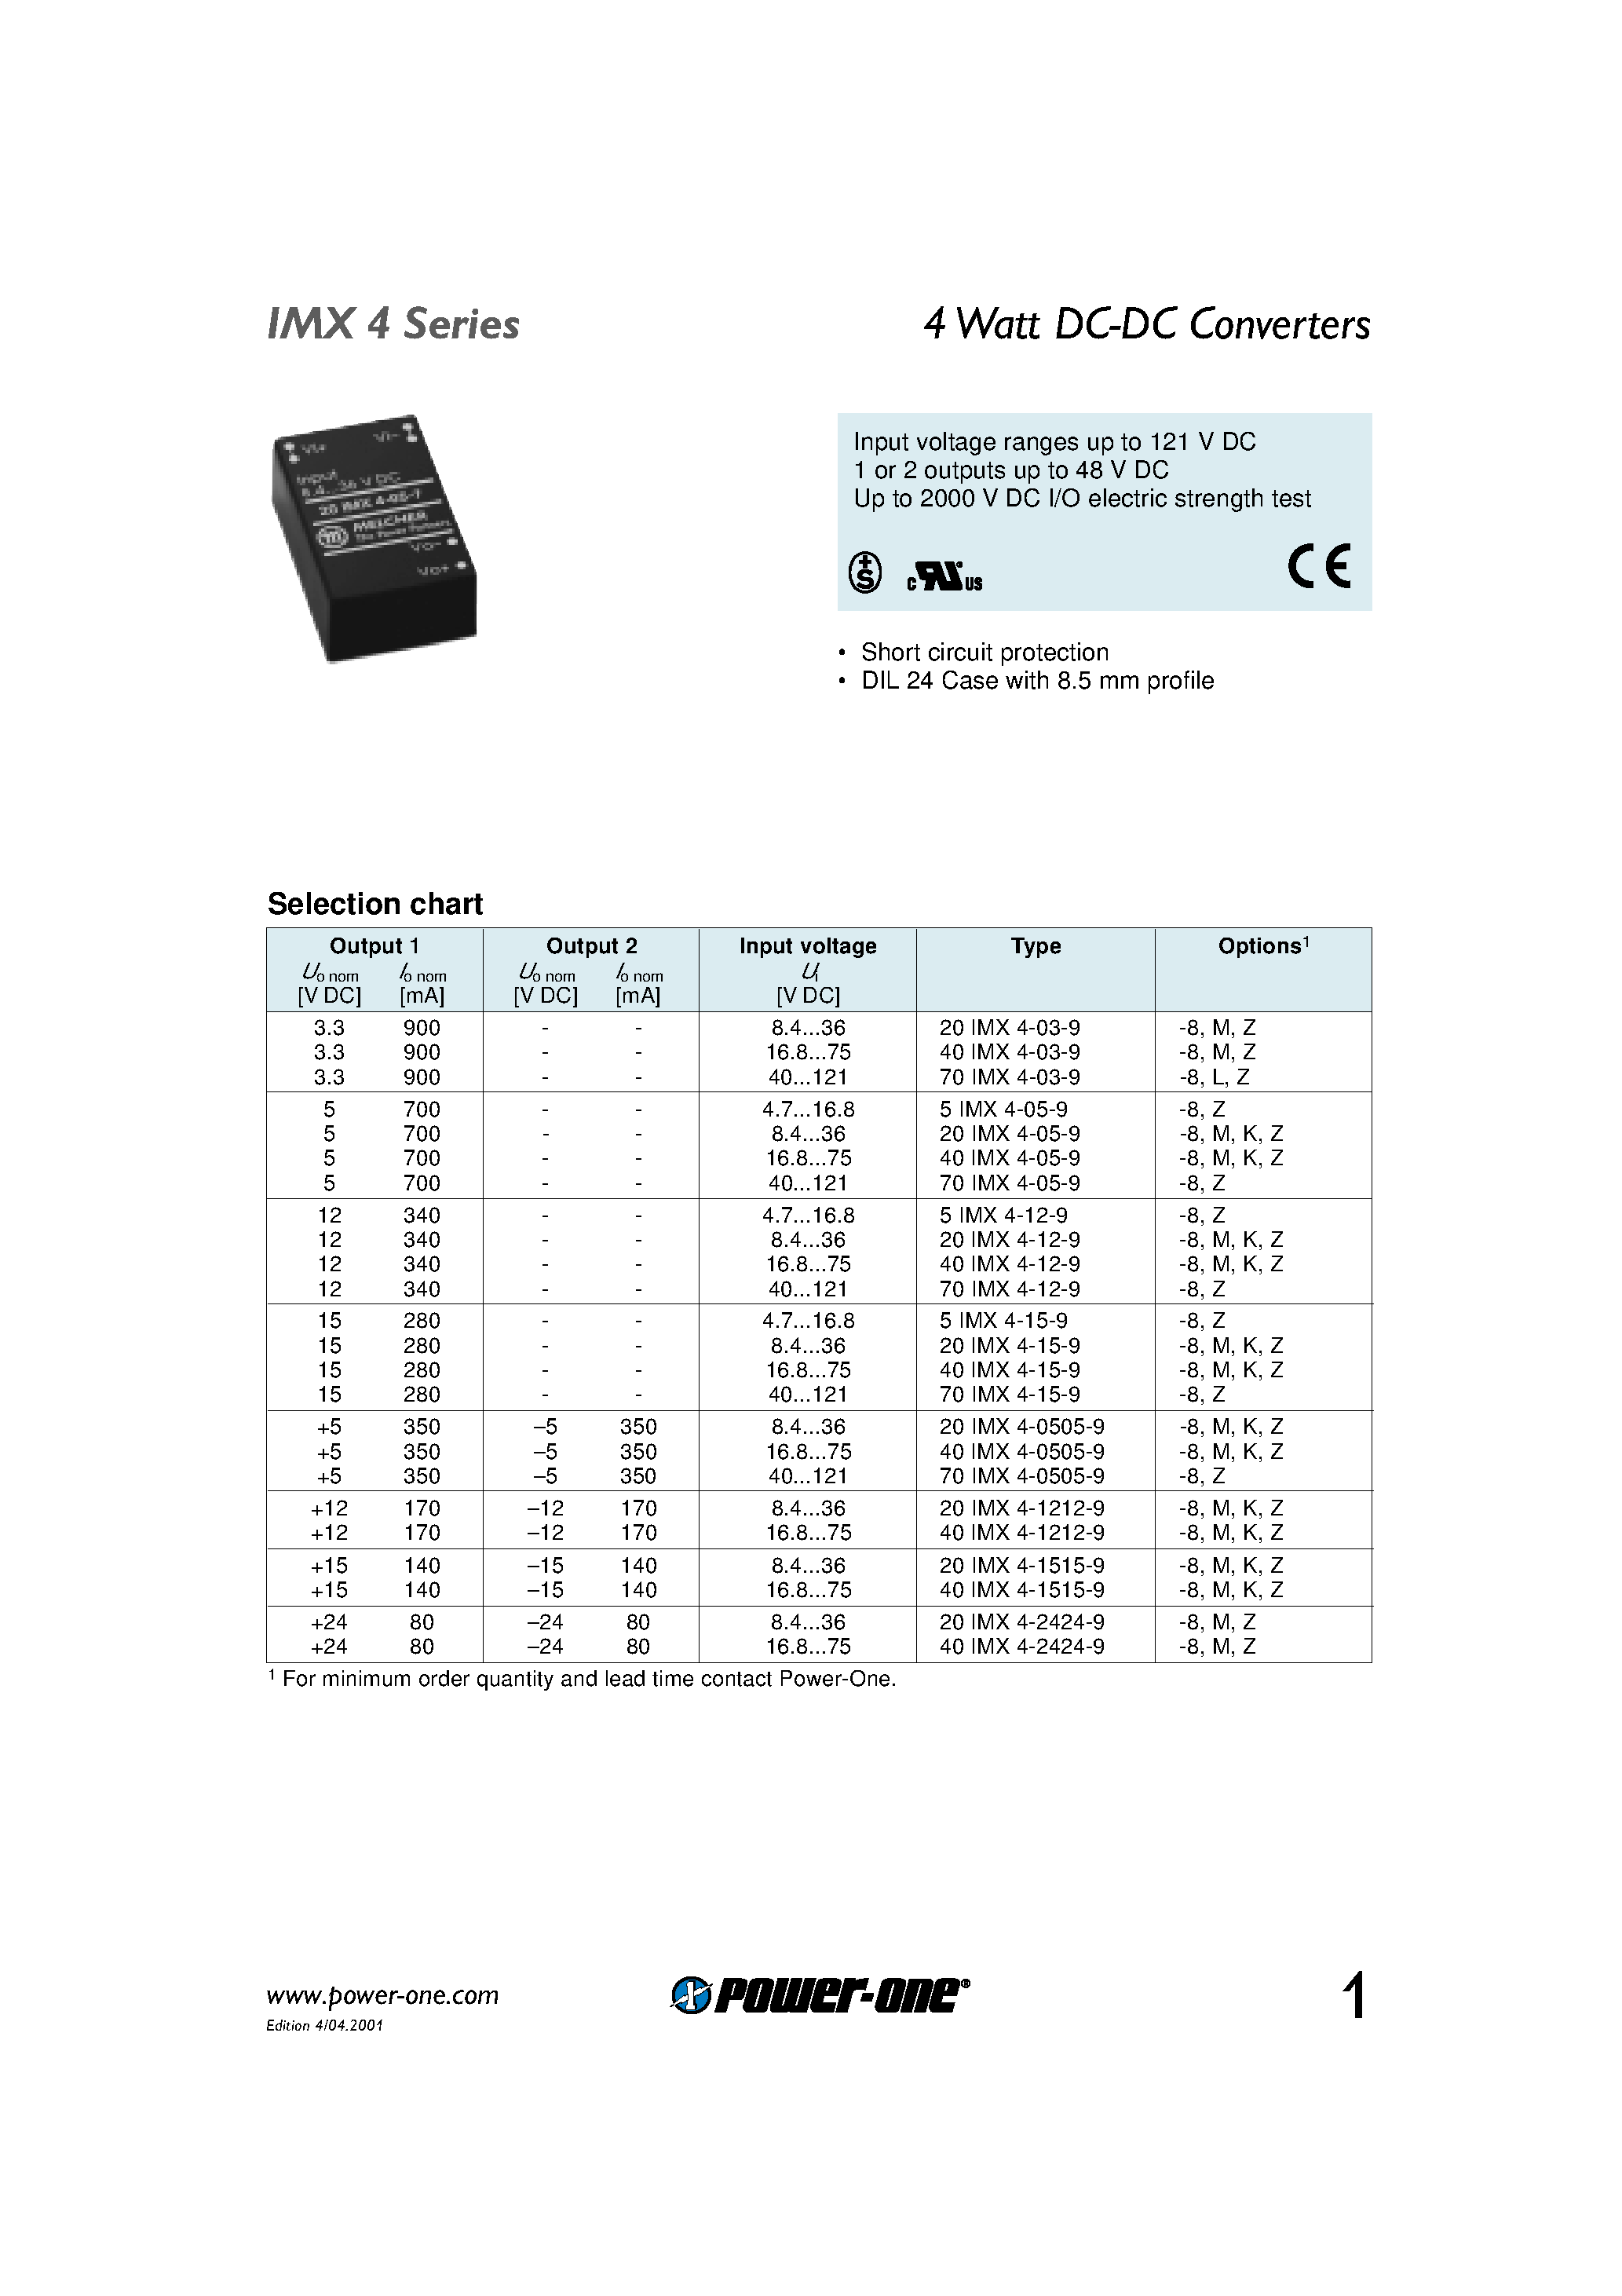 Даташит 70IMX4-05-9 - 4 Watt DC-DC Converters страница 1